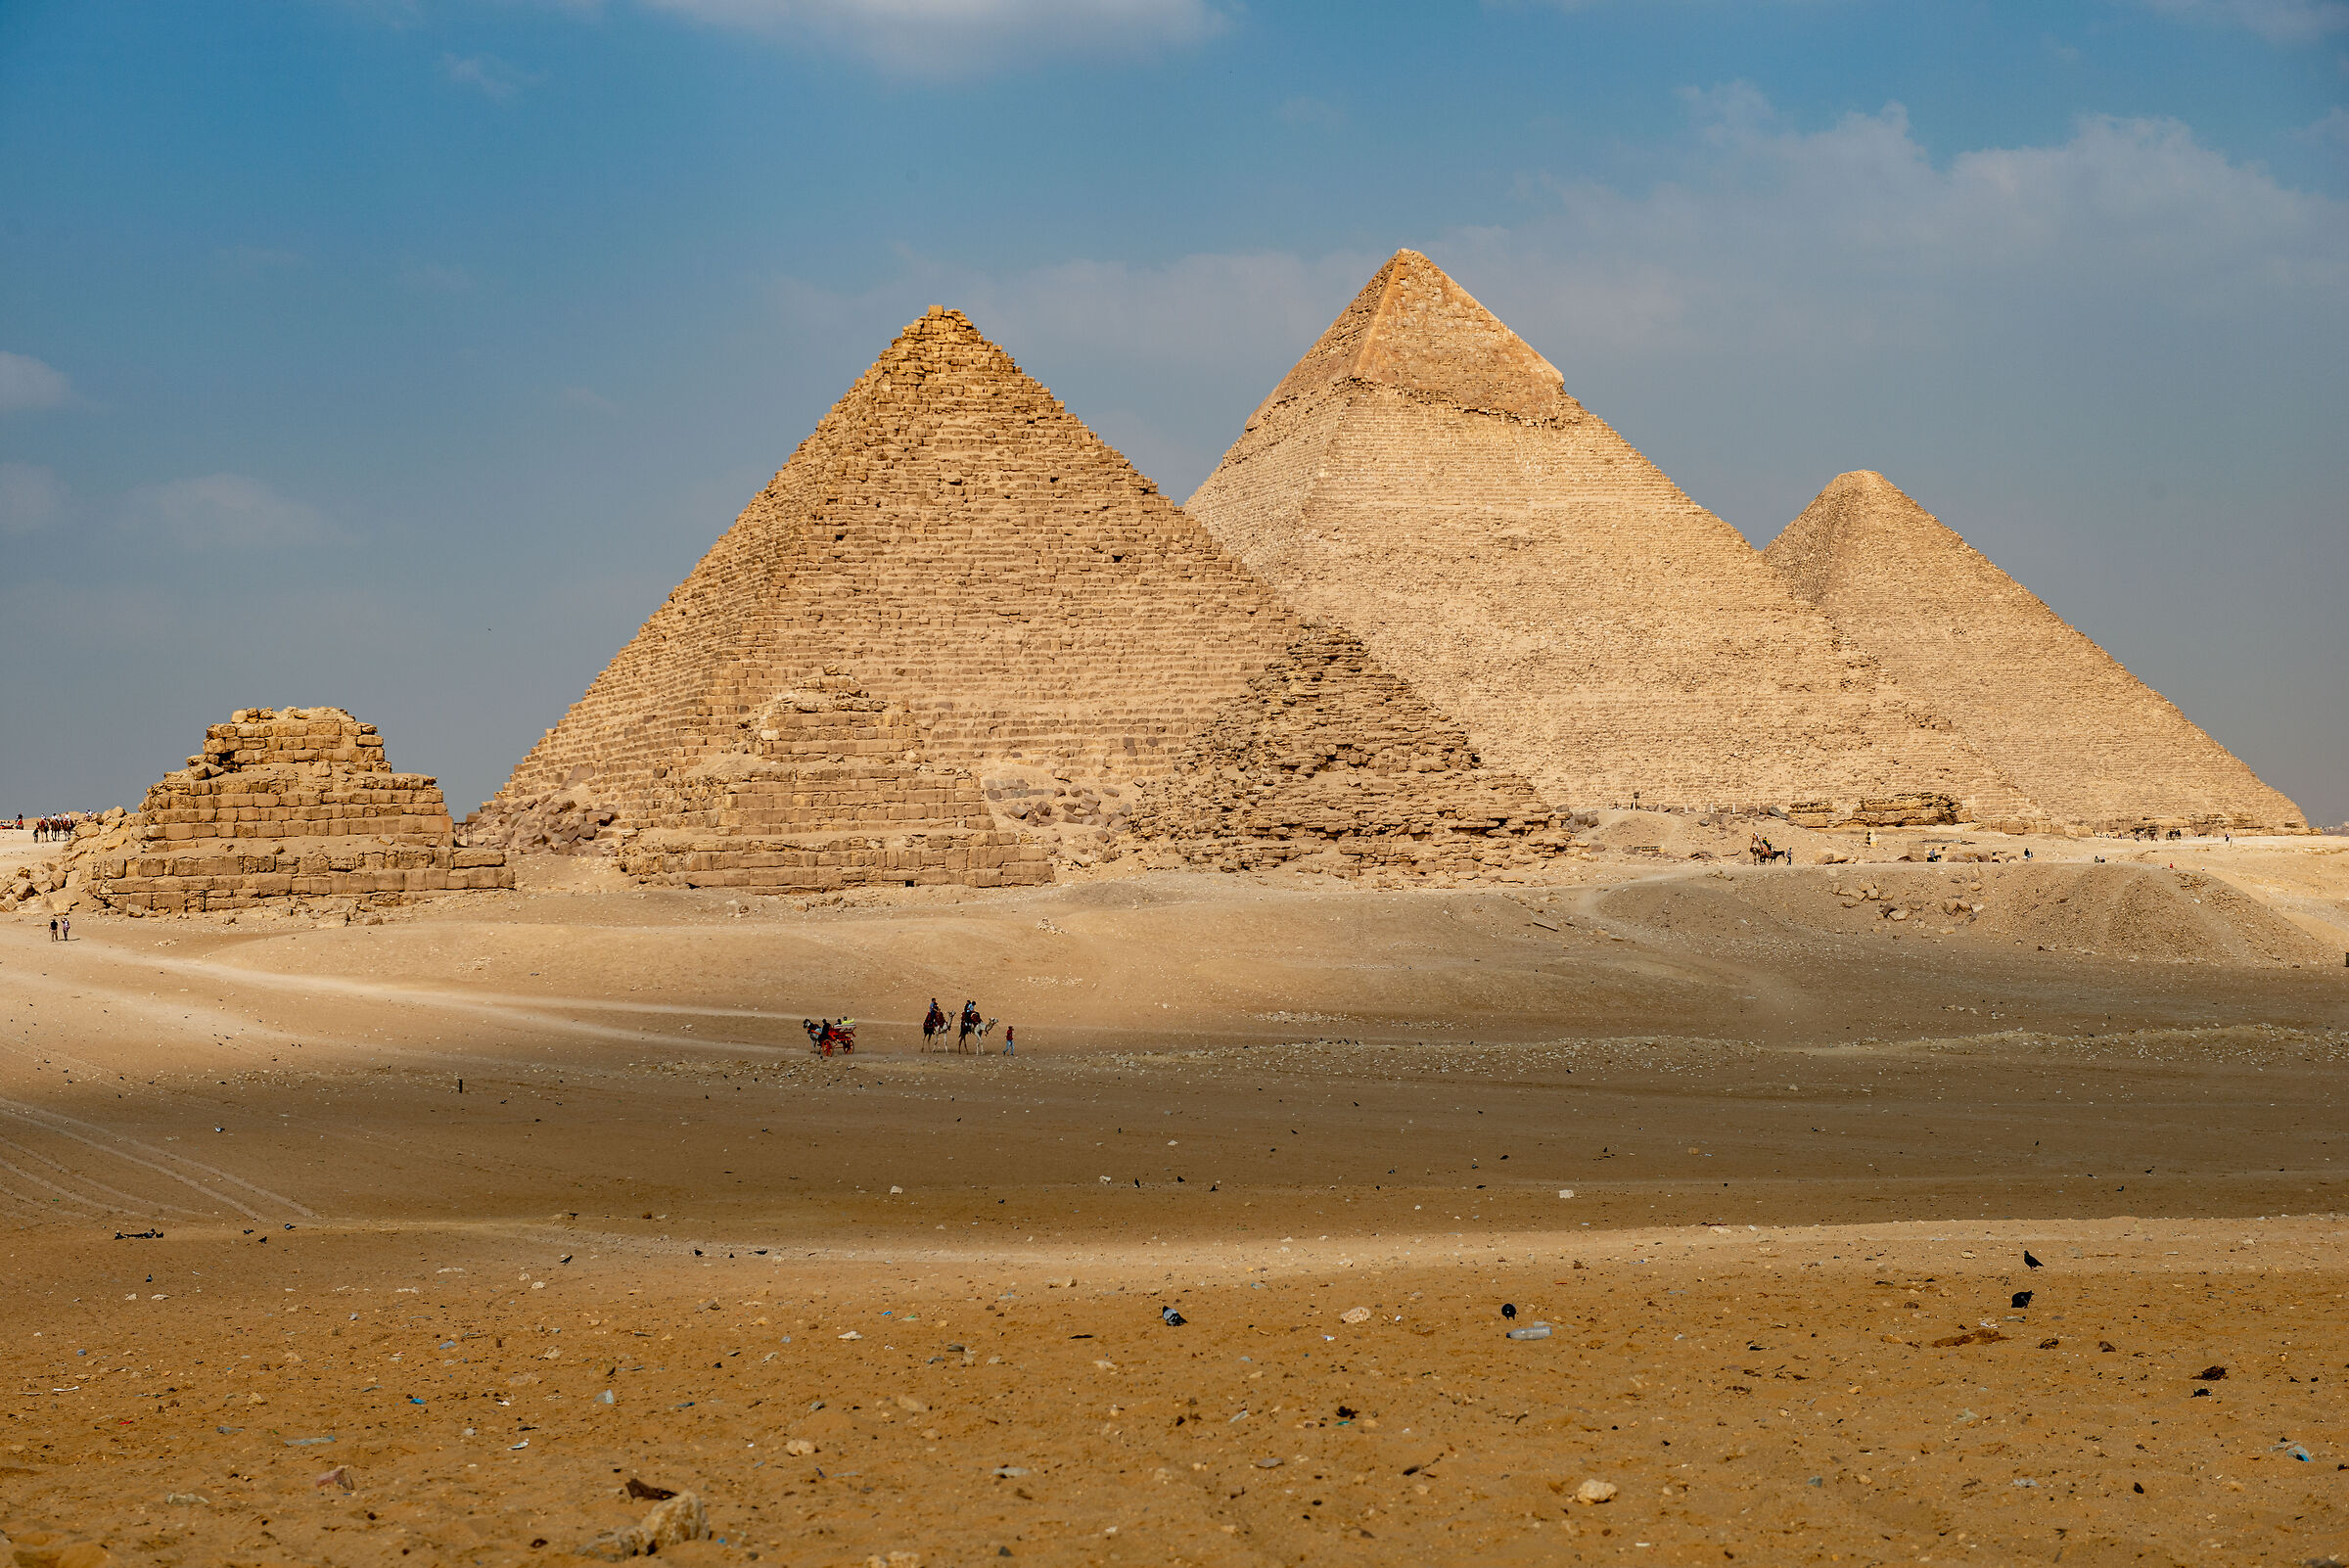 The pyramids of Giza...